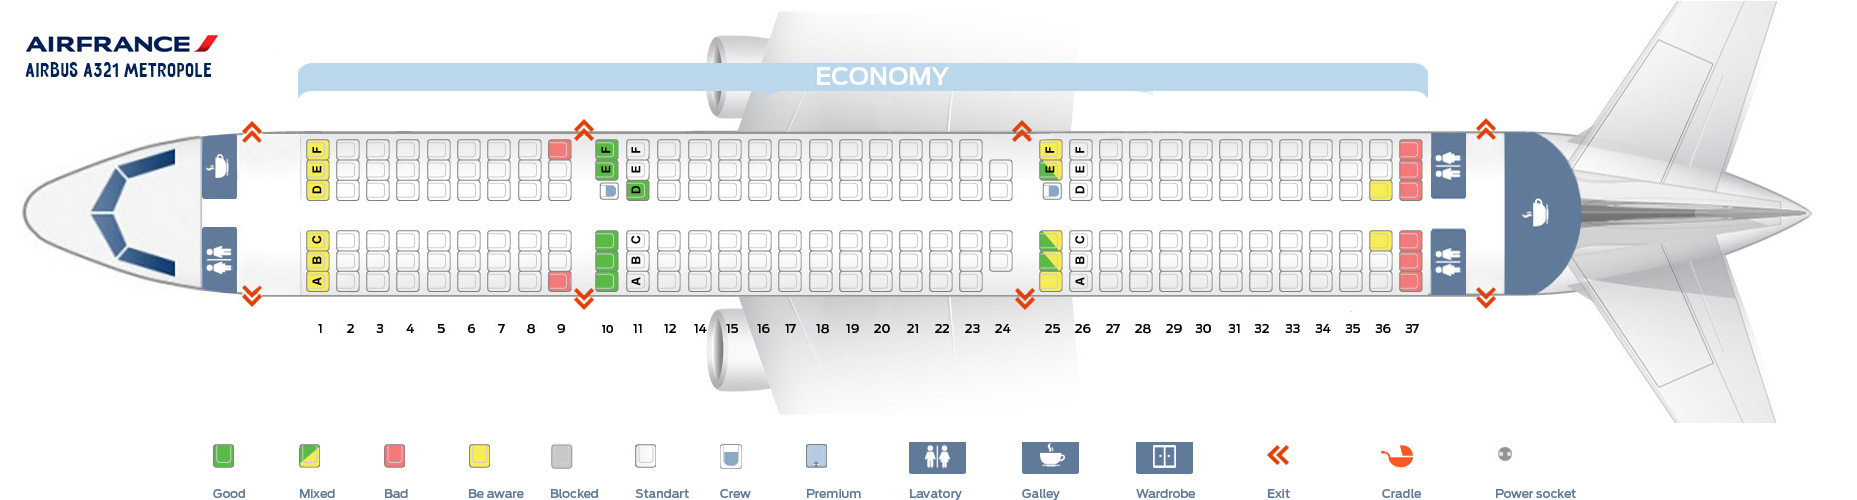 Air France Seating Chart